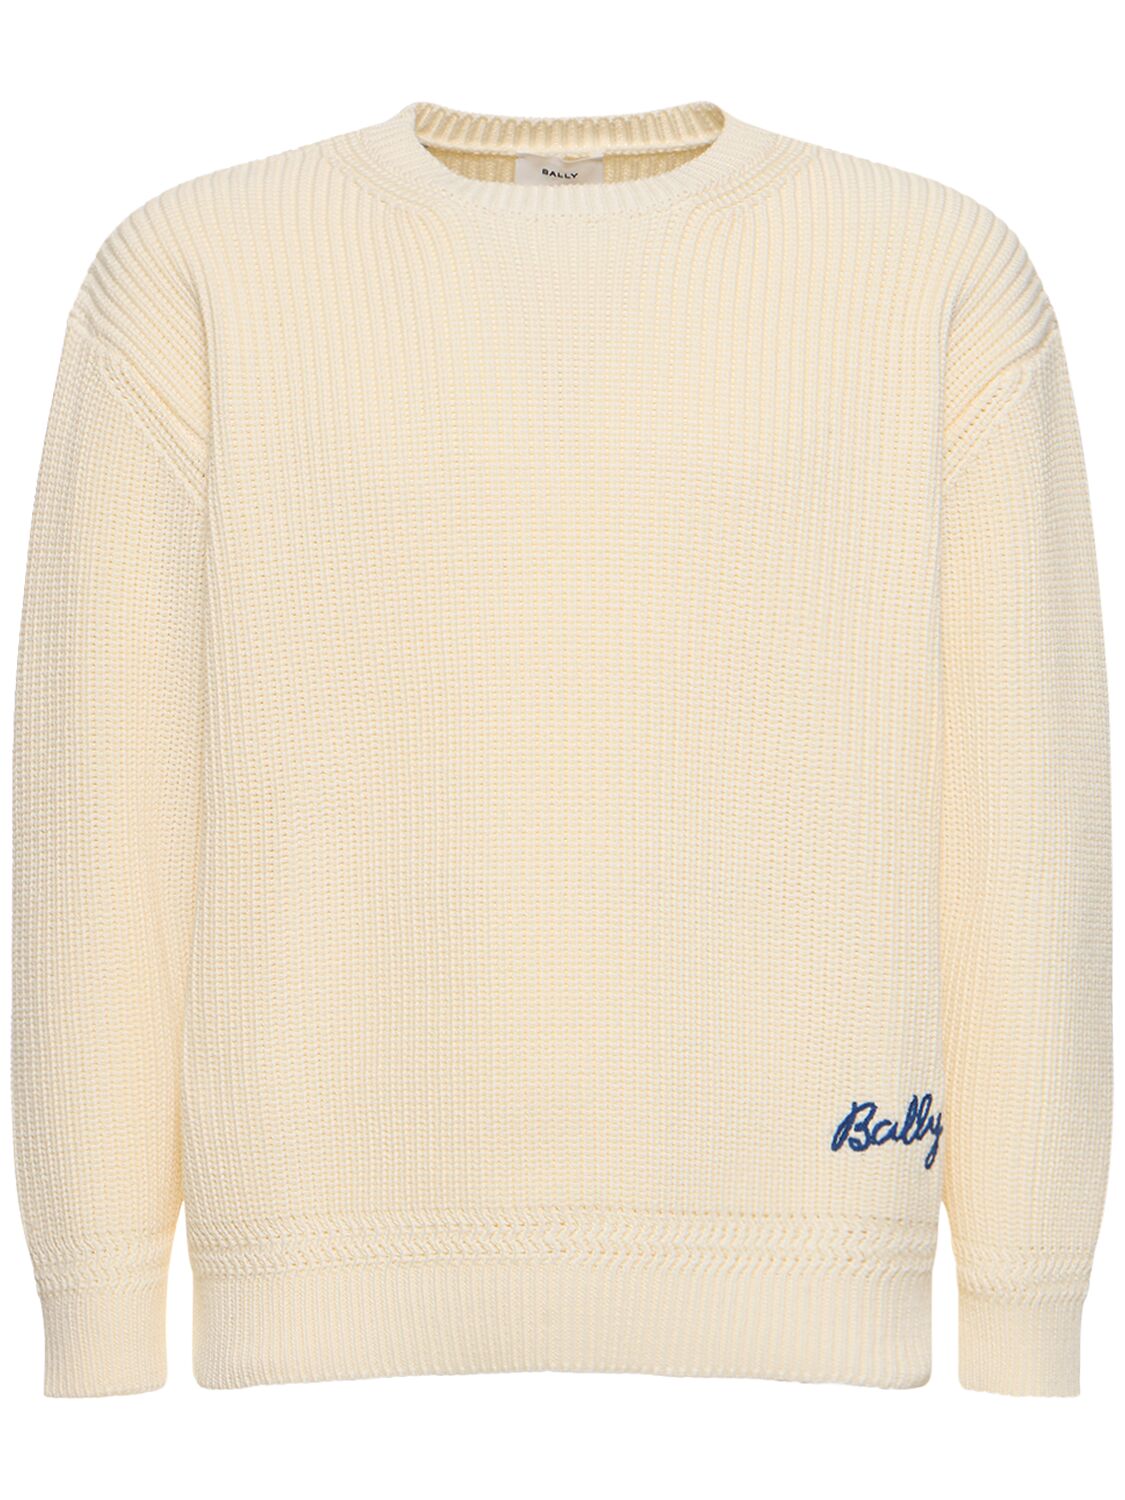 Bally Logo Cotton Sweater In Bone